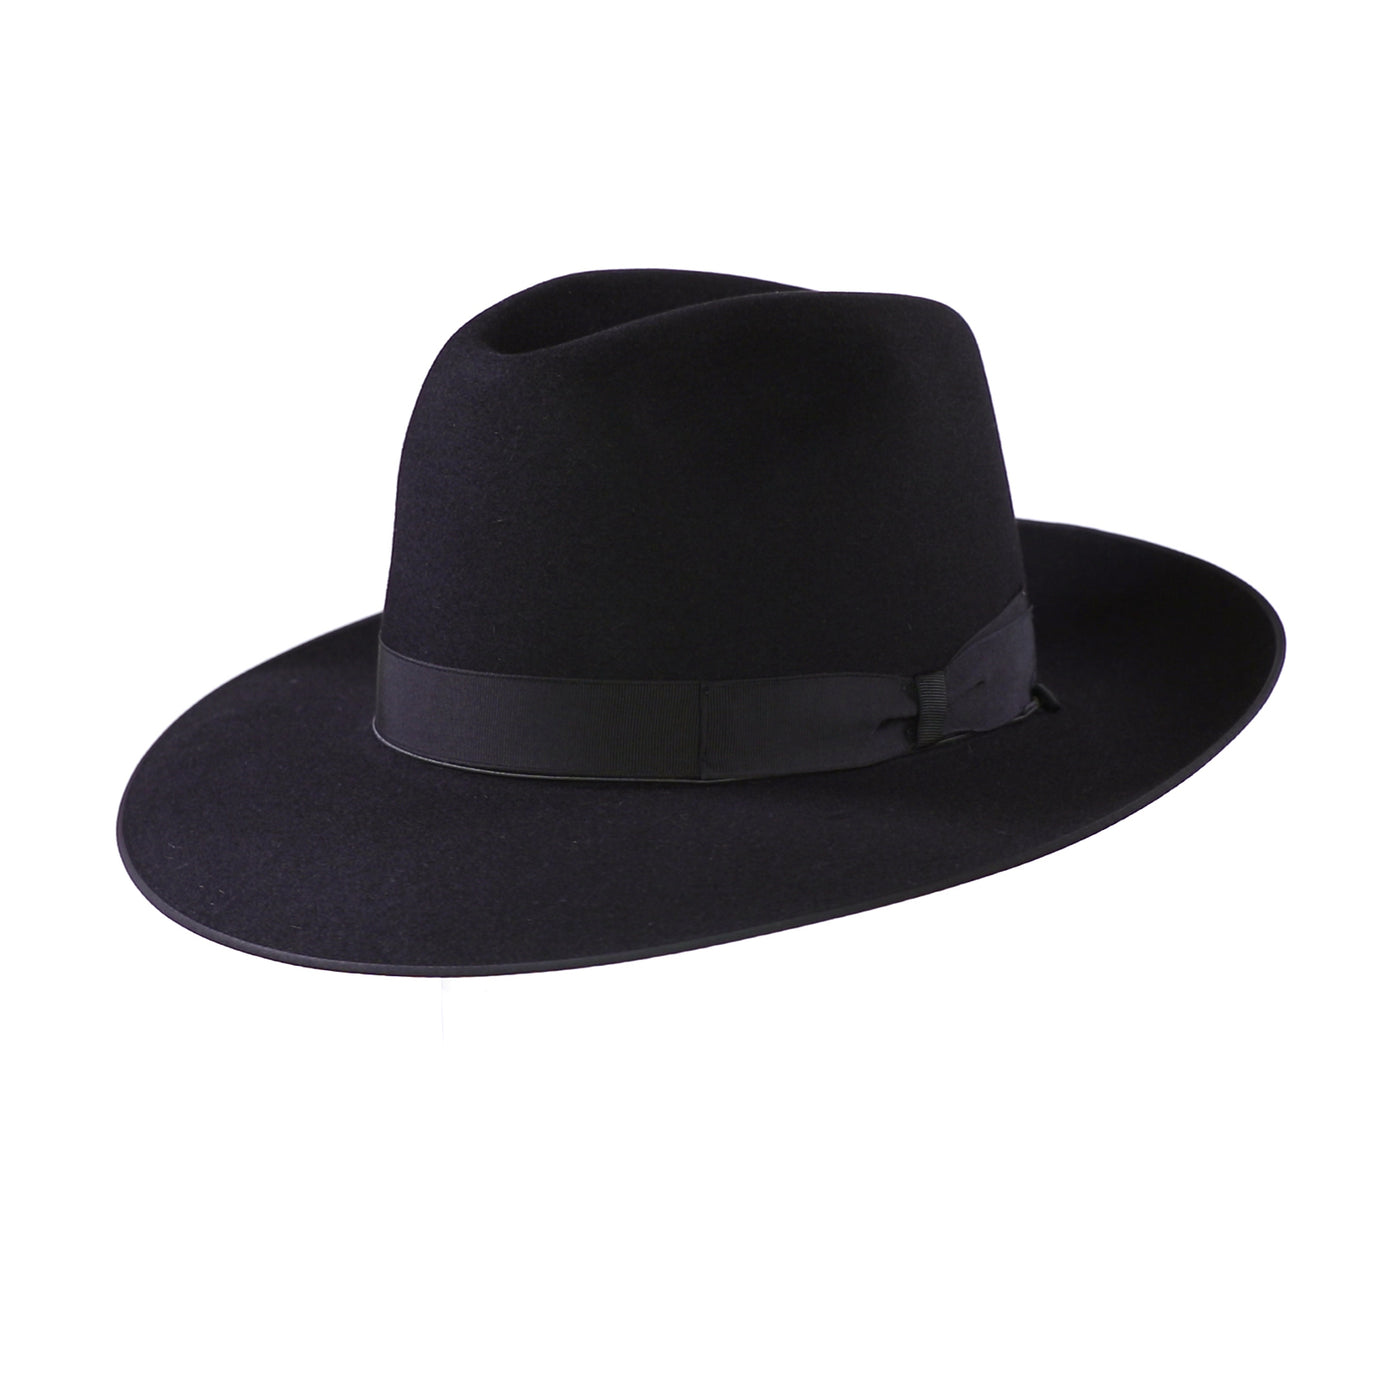 Giorgio 314 -, product_type] - Borsalino for Atica fedora hat